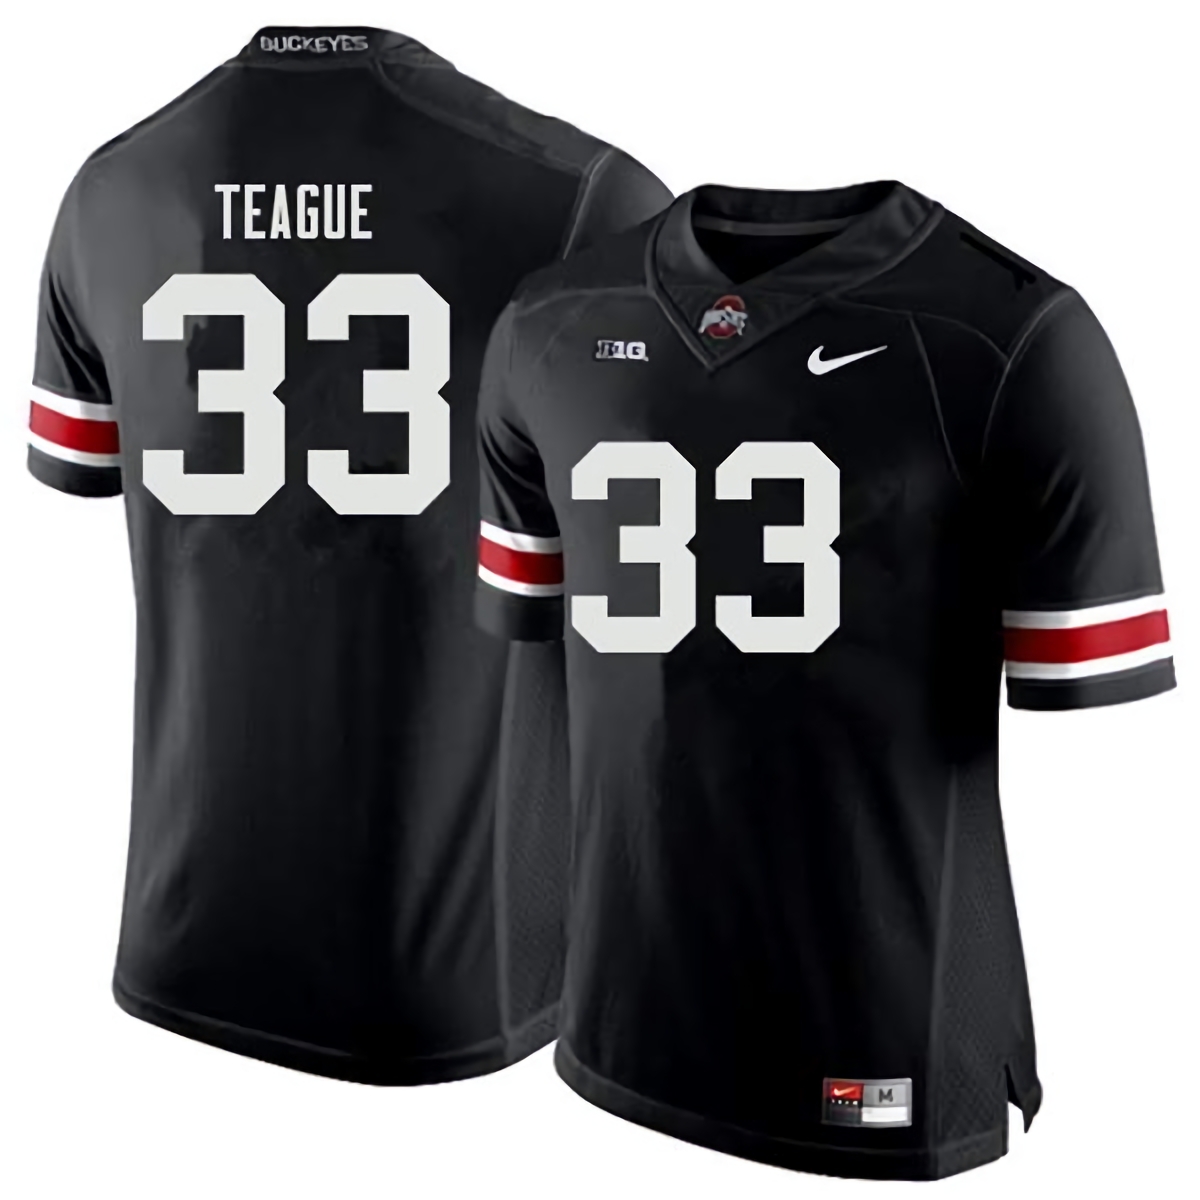 Master Teague Ohio State Buckeyes Men's NCAA #33 Nike Black College Stitched Football Jersey QAR2656BU